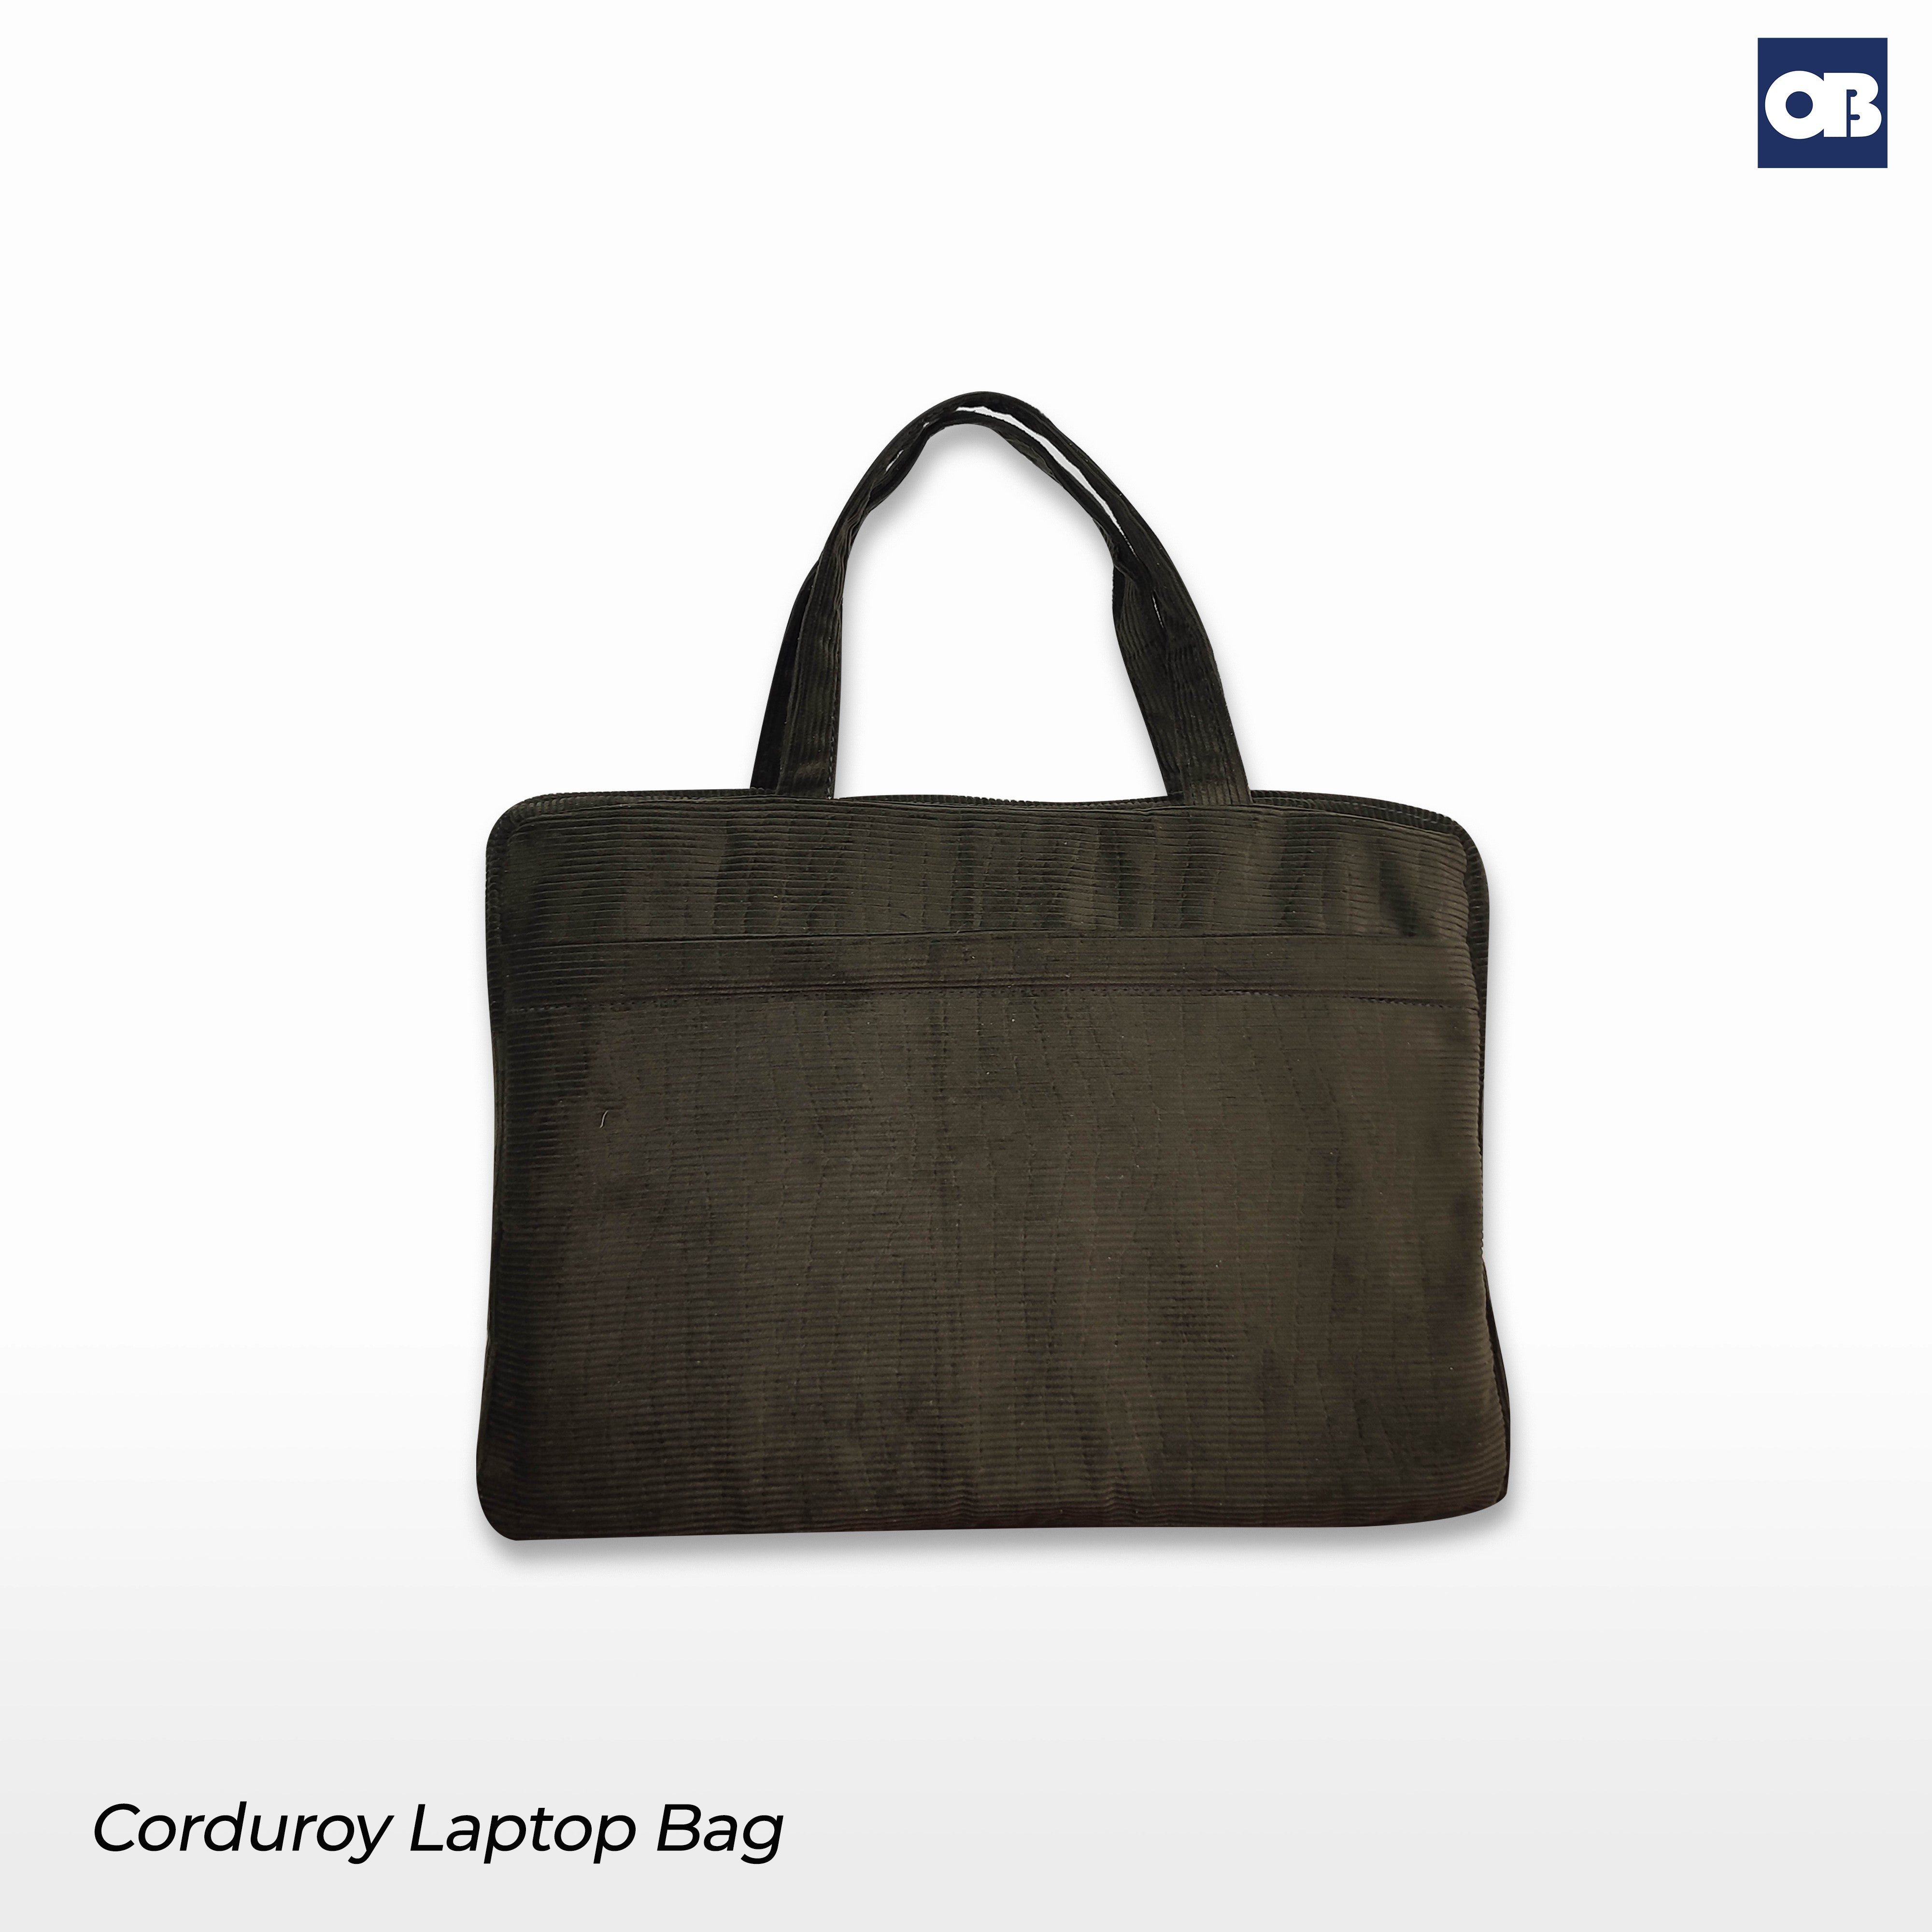 OB Corduroy Laptop Bag